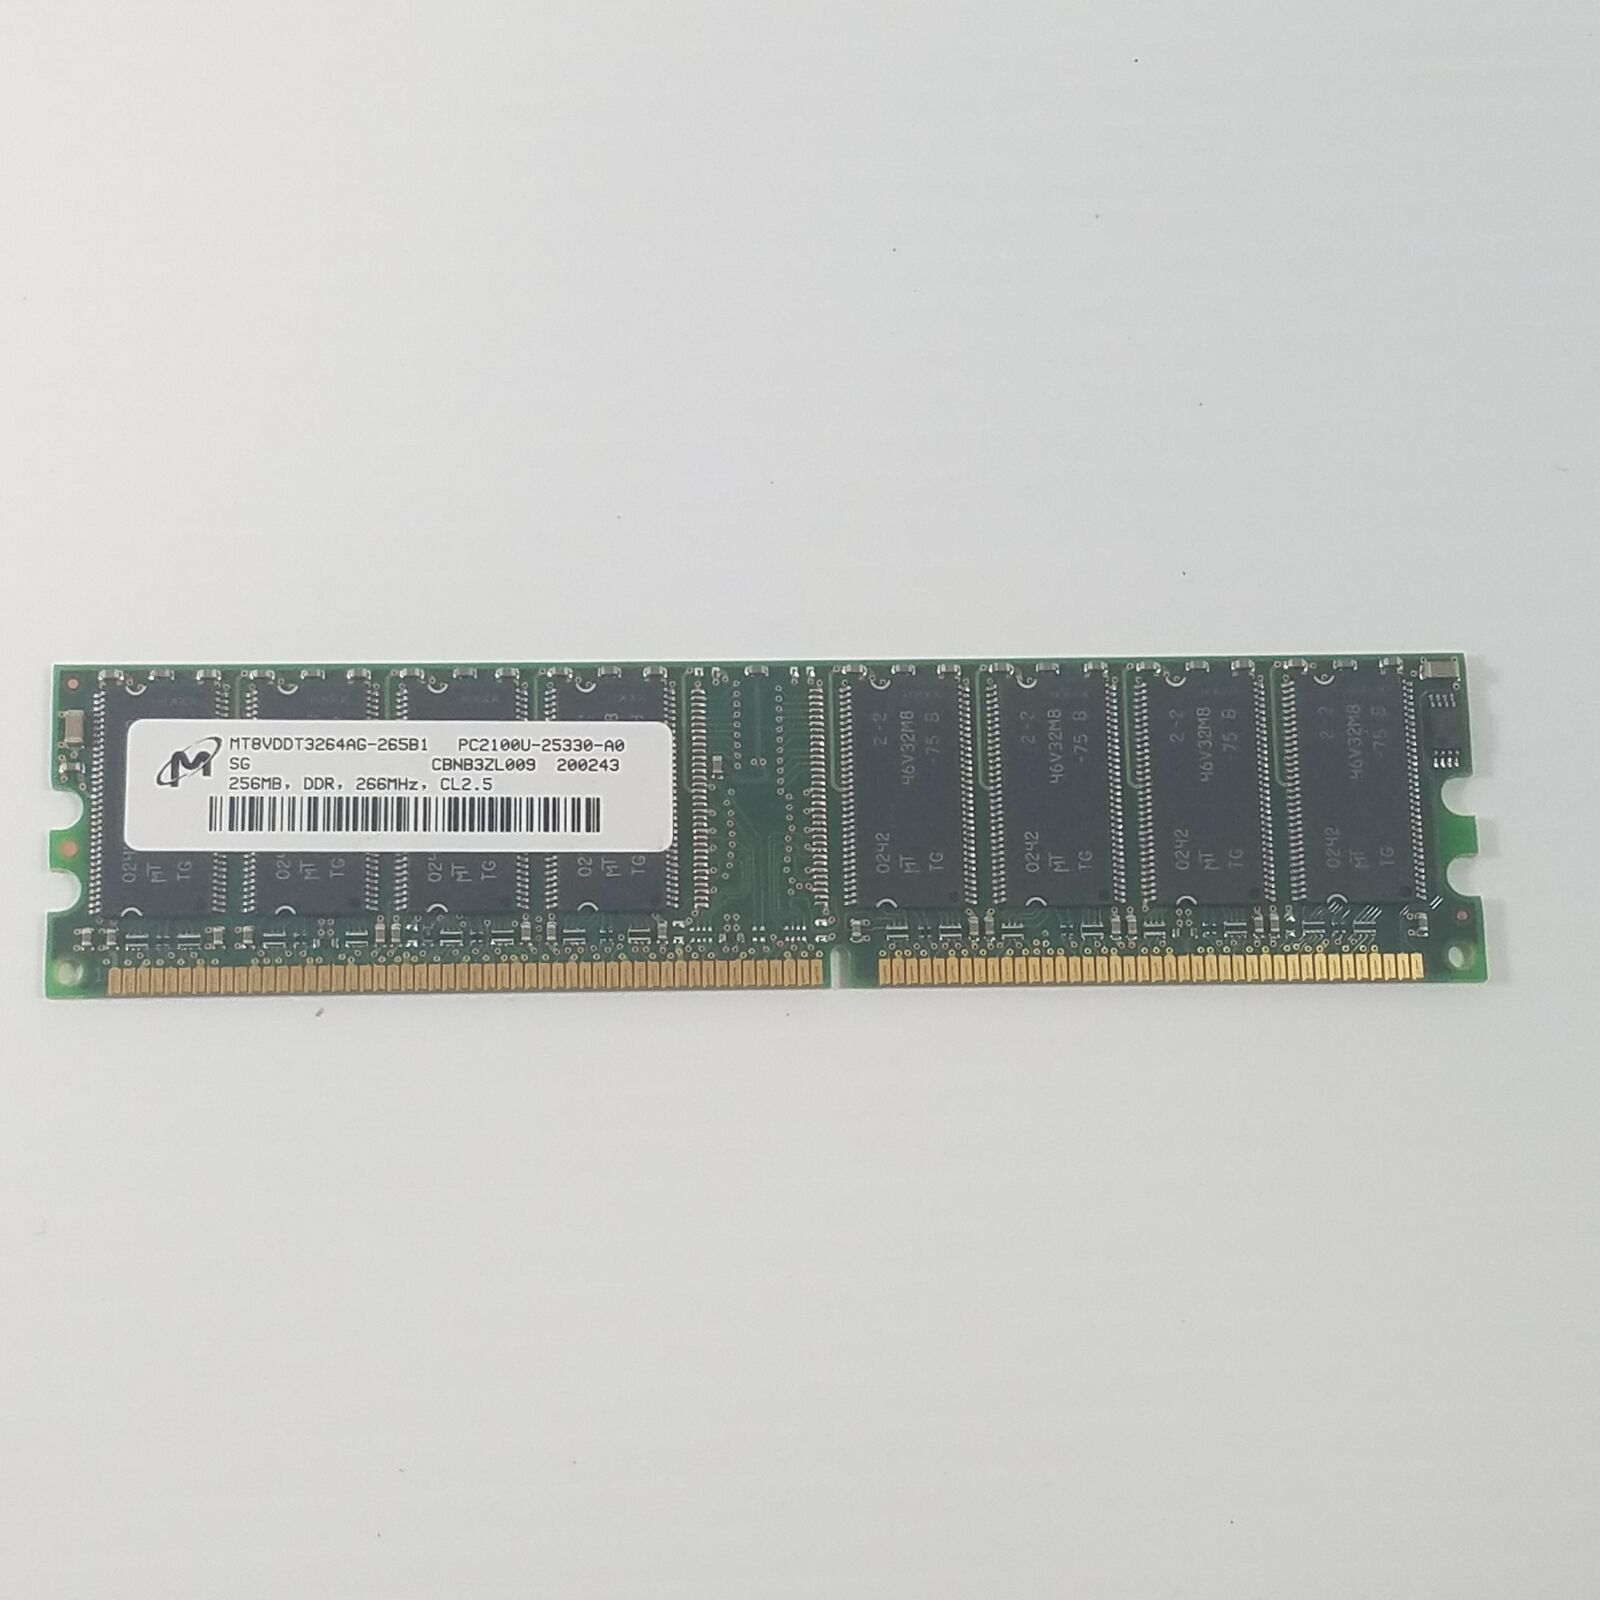 Micron 256MB PC2100 Desktop RAM MT8VDDT3264AG-265B1